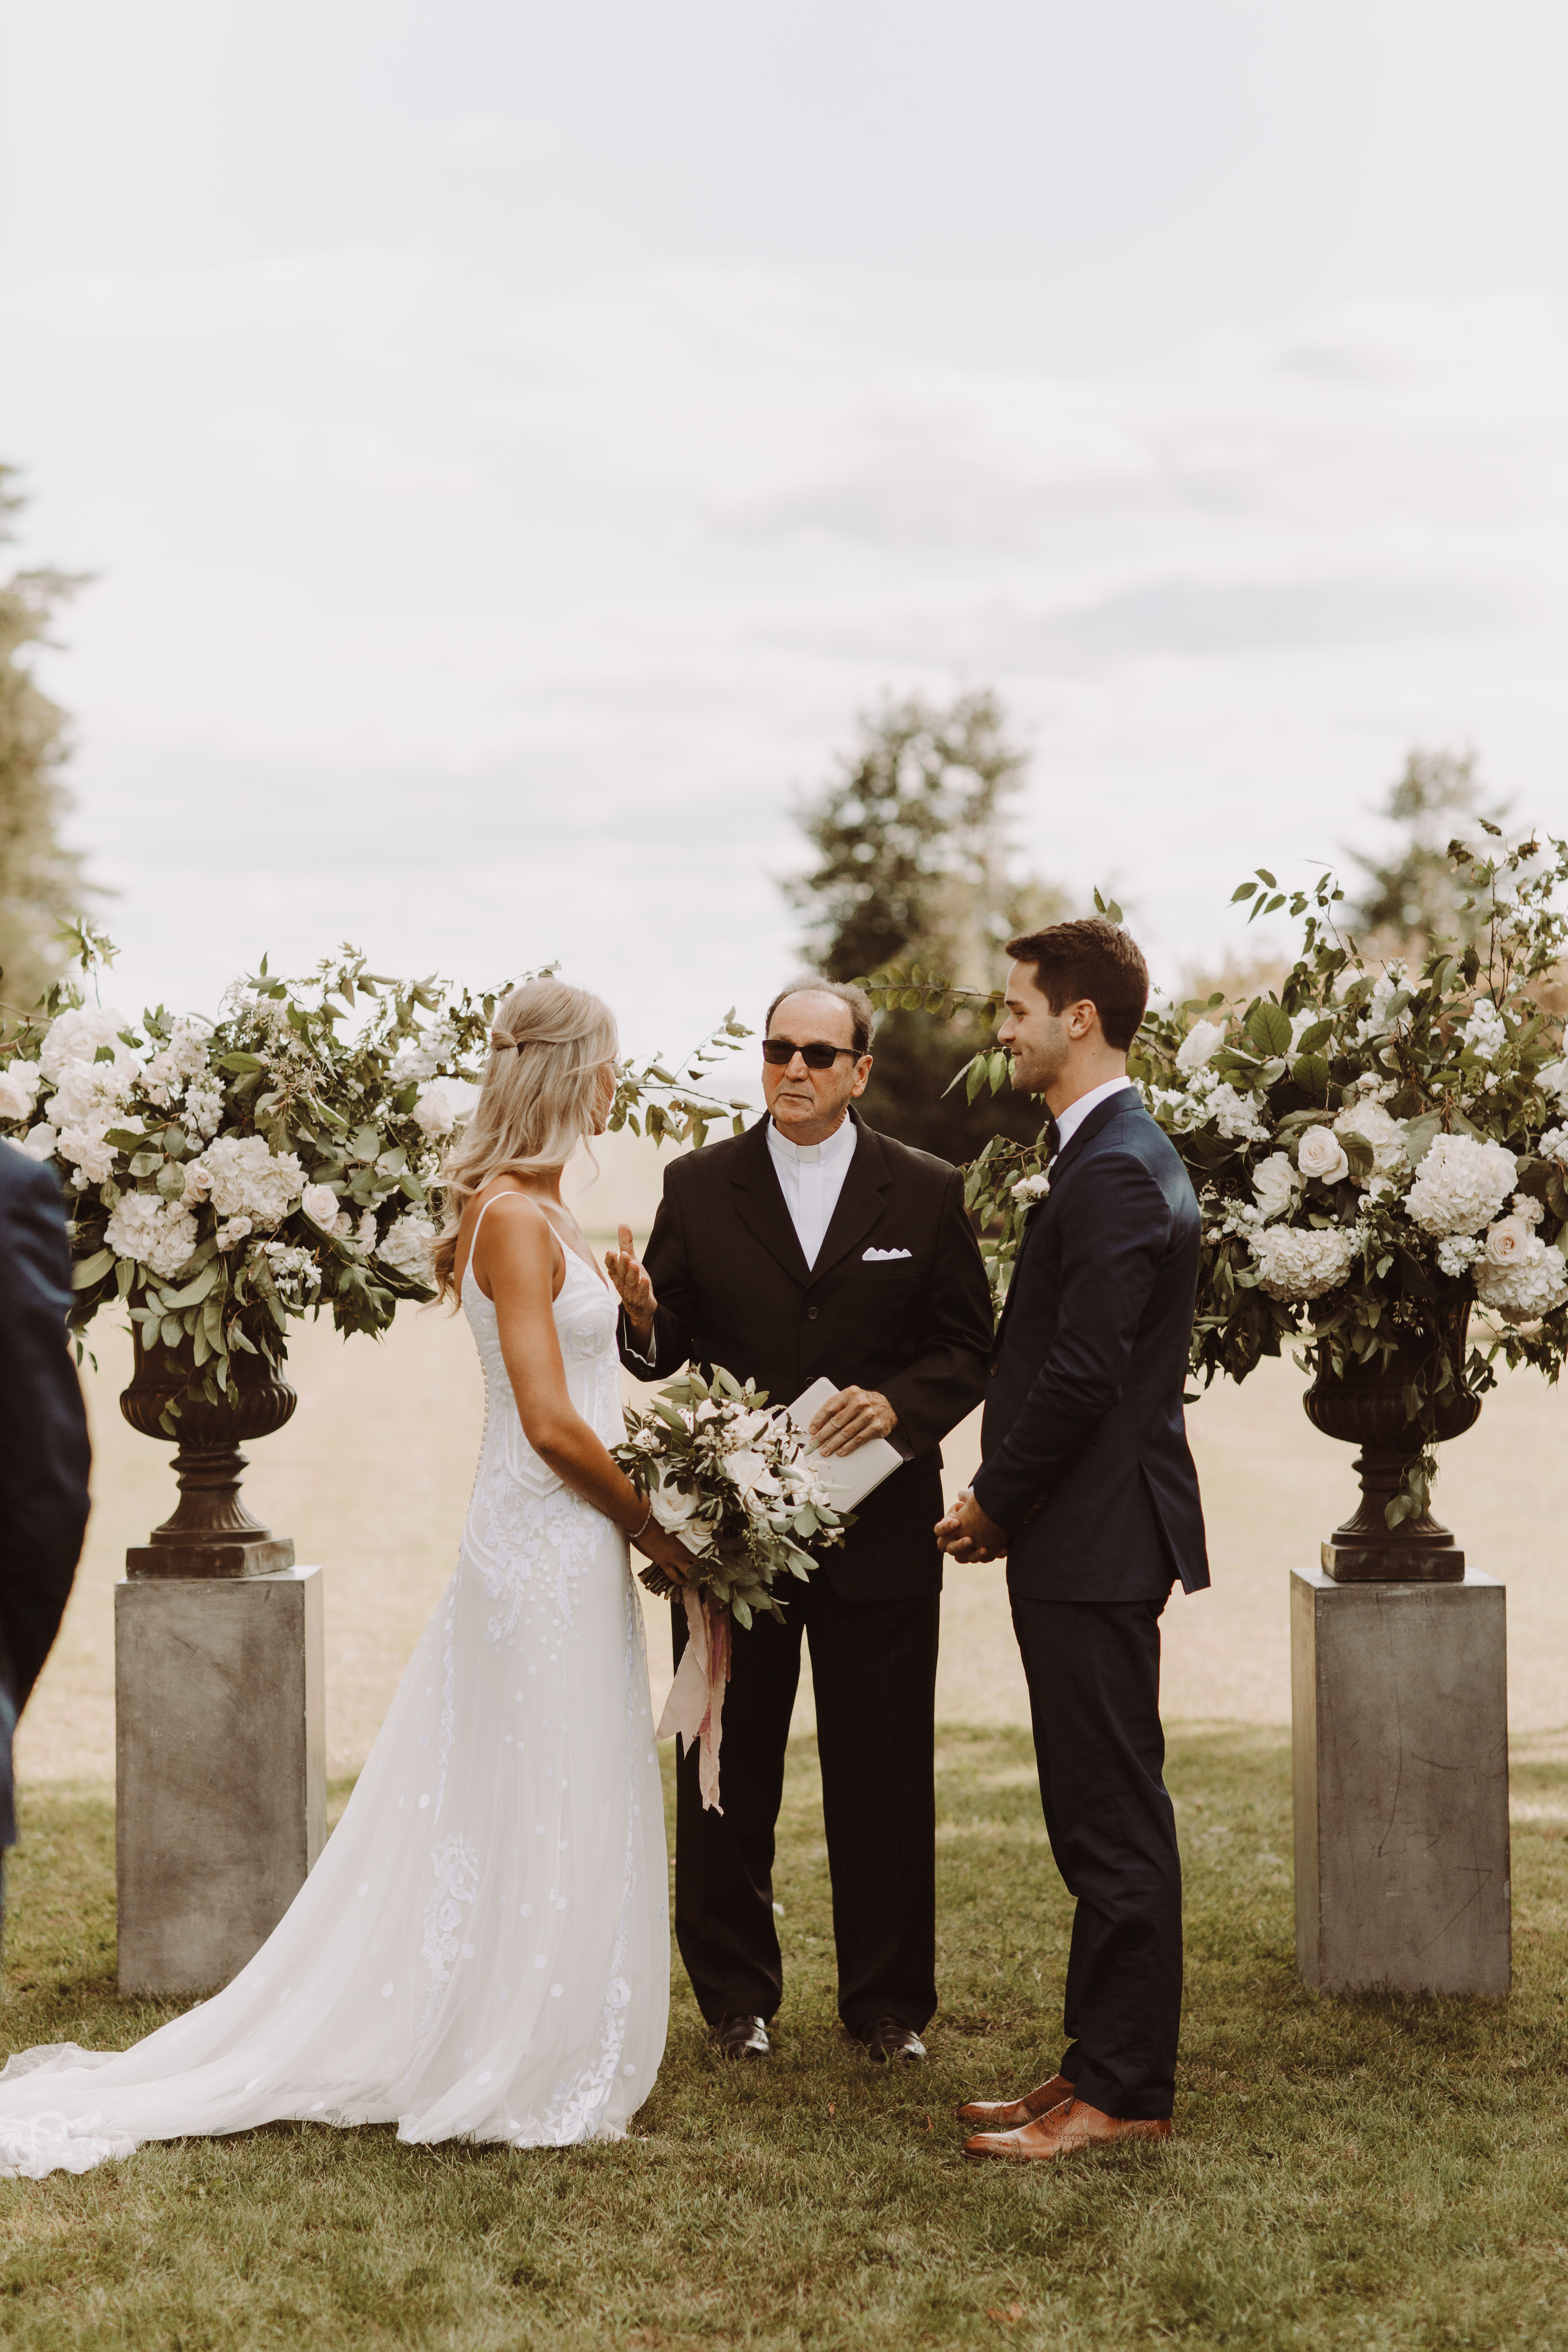 Kristen & Jake's beautiful wedding at Annapolis waterfront wedding venue  - Whitehall 